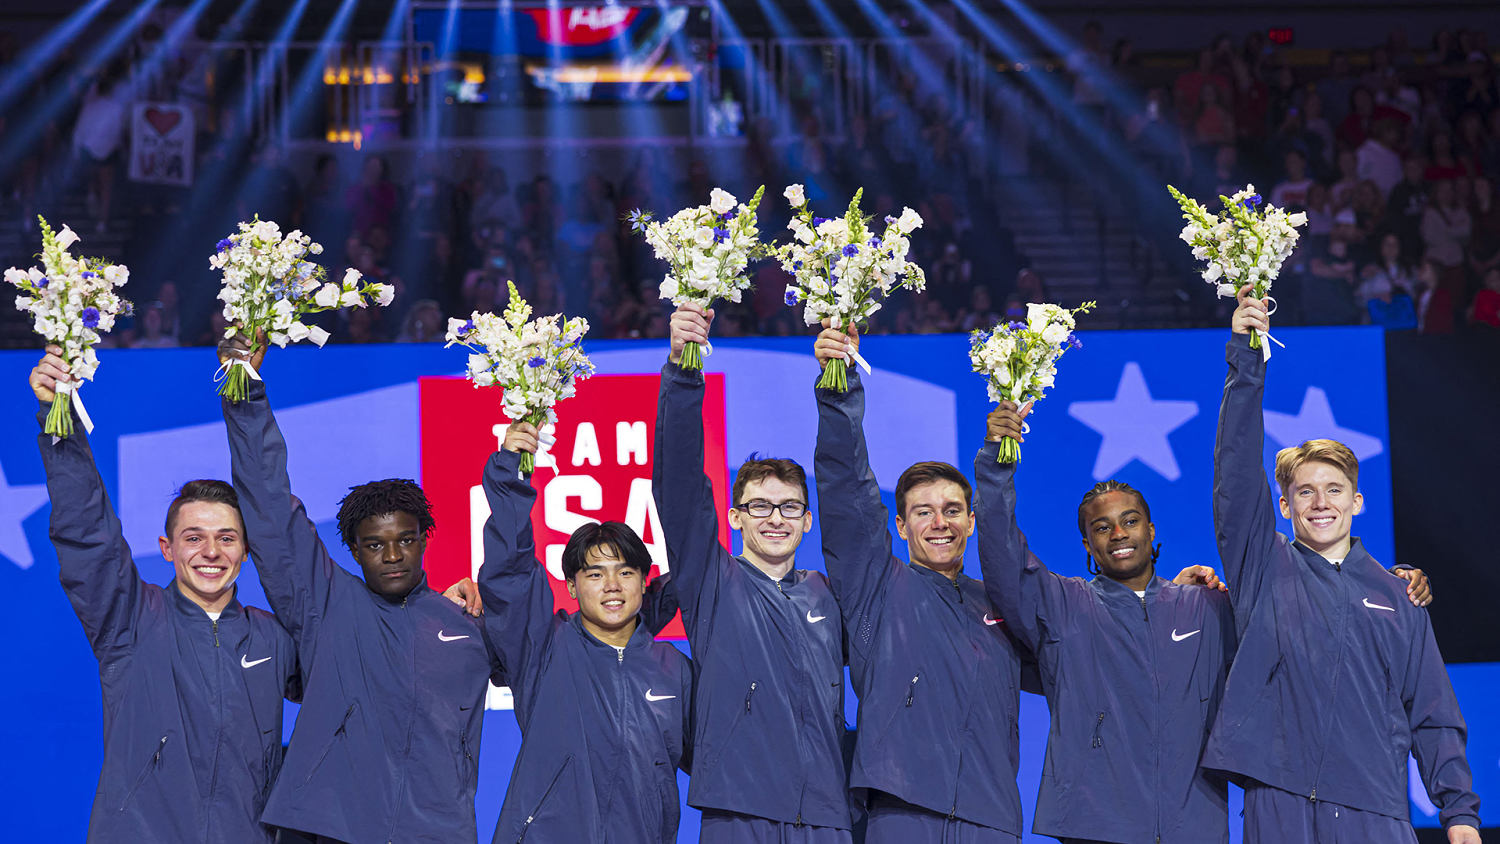 Watch: U.S. men's gymnastics team presented ahead of Paris